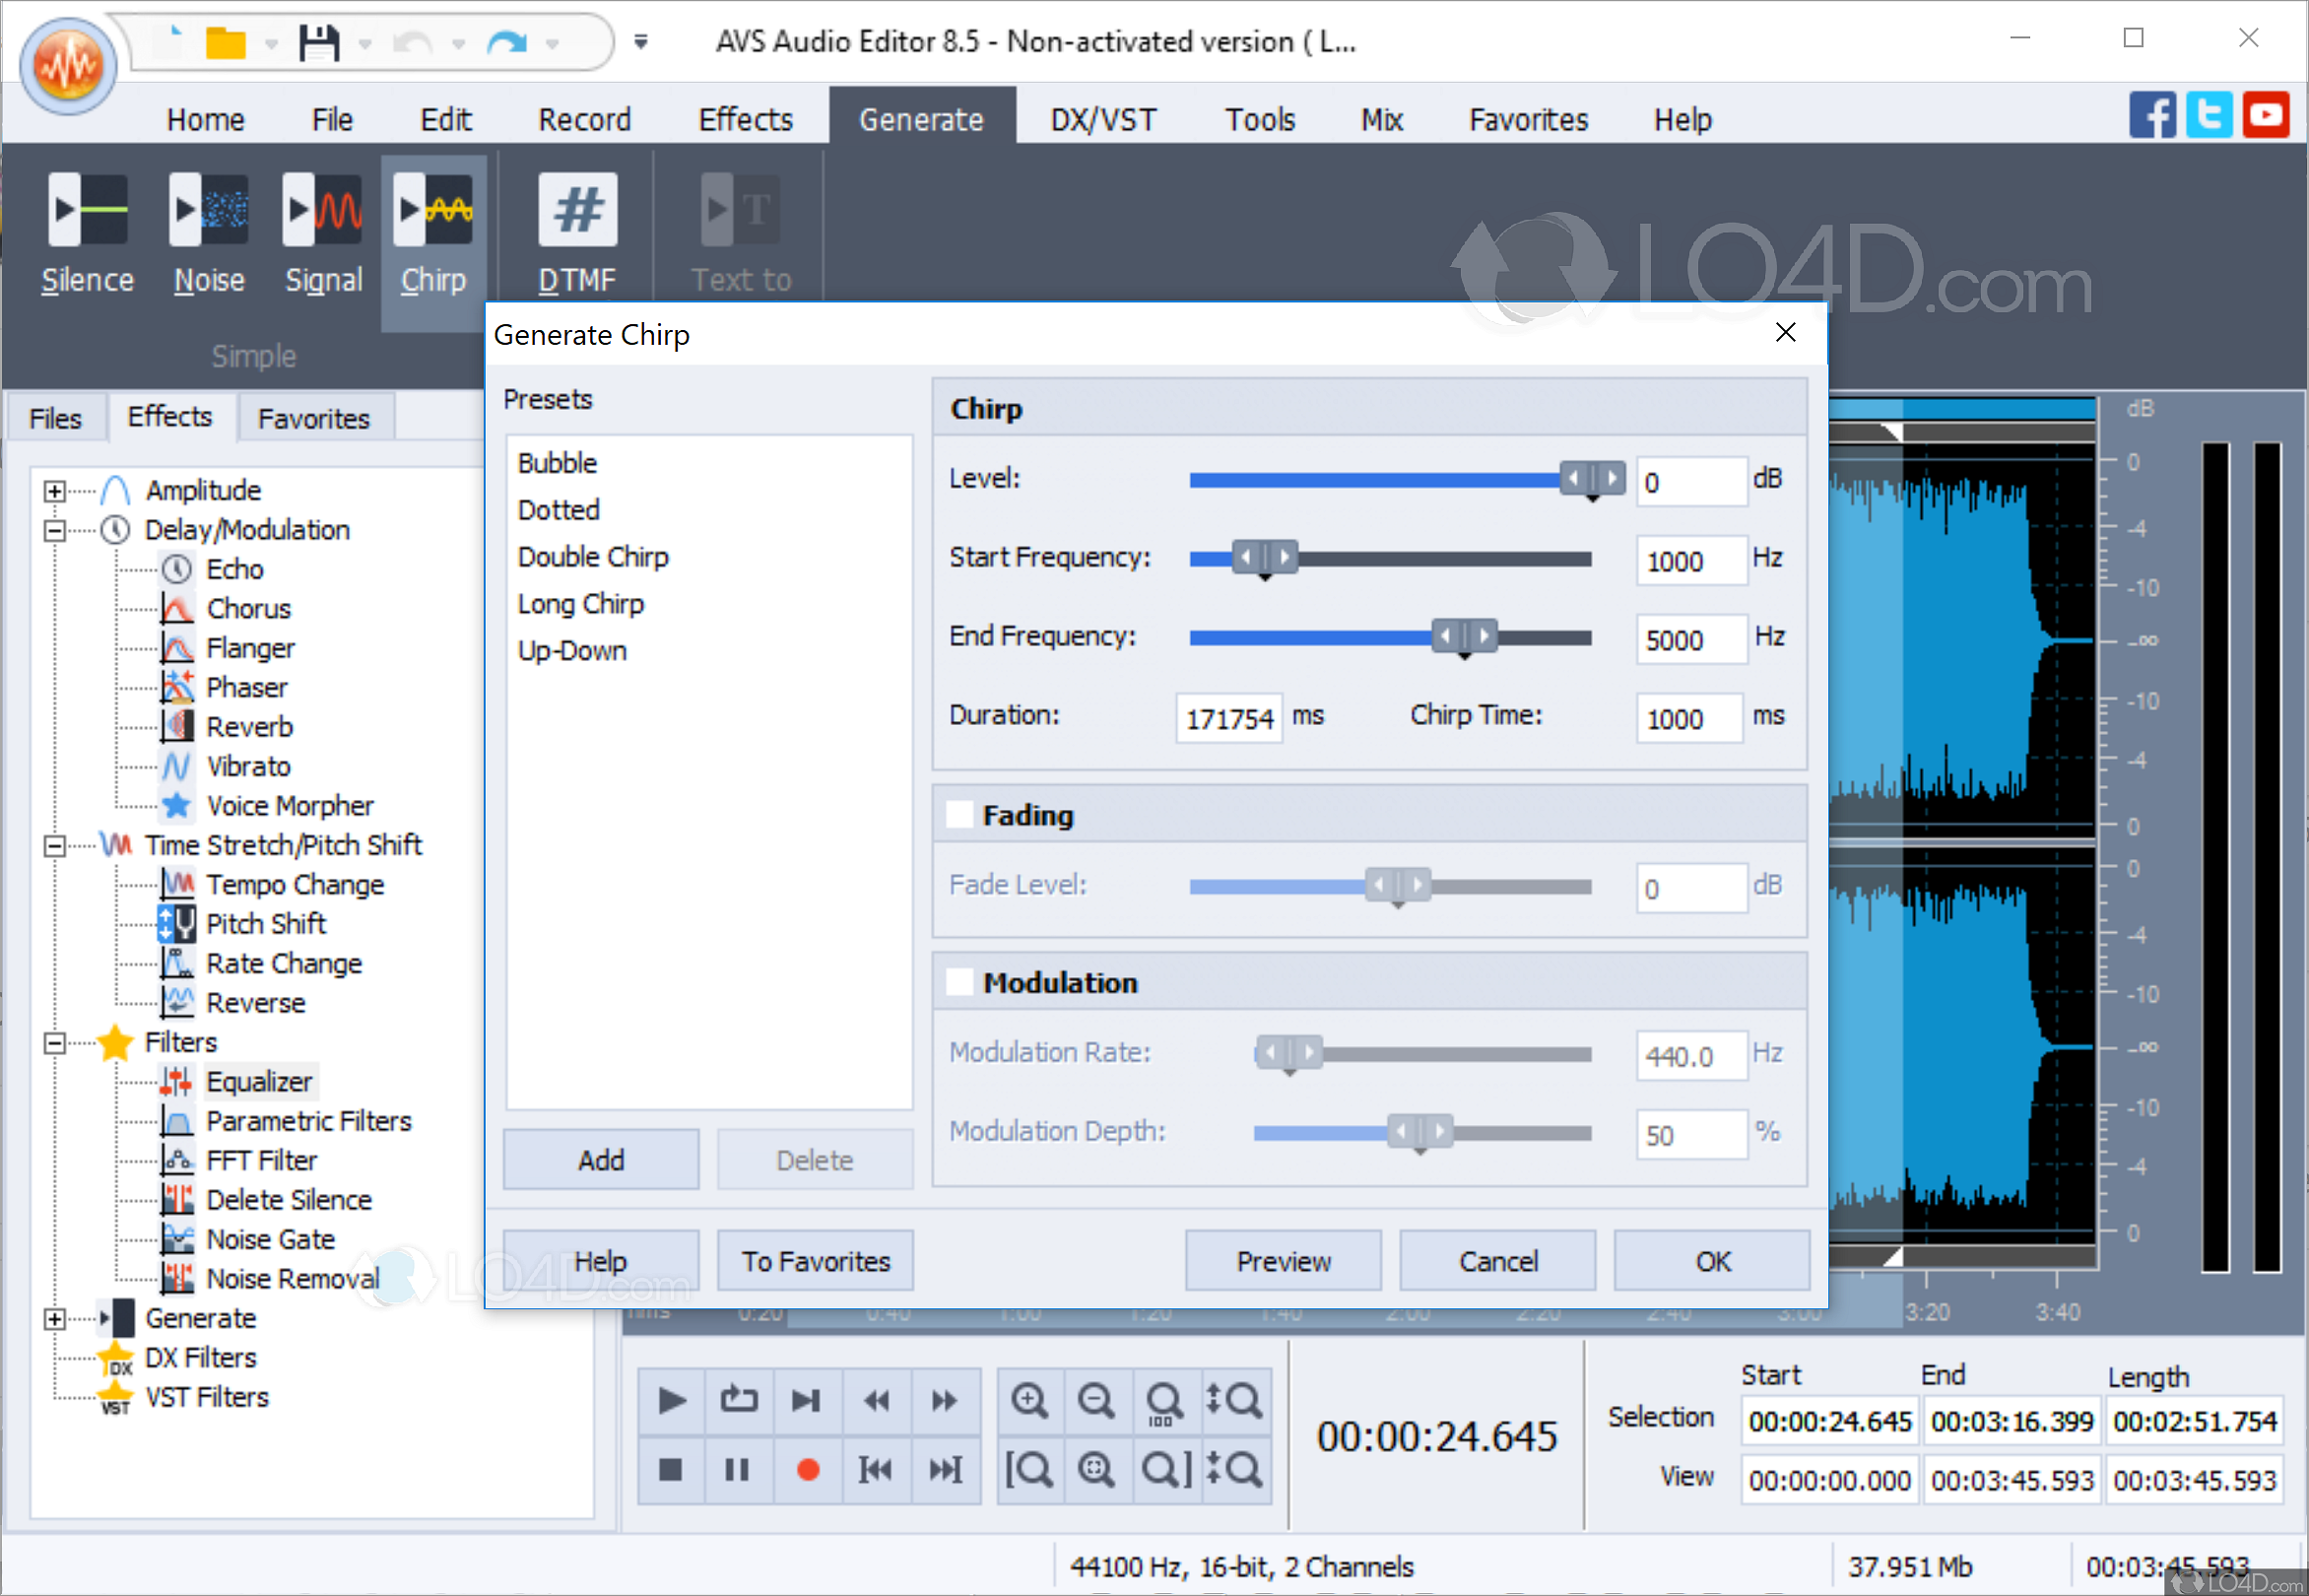 AVS Audio Editor 10.4.2.571 download the last version for windows